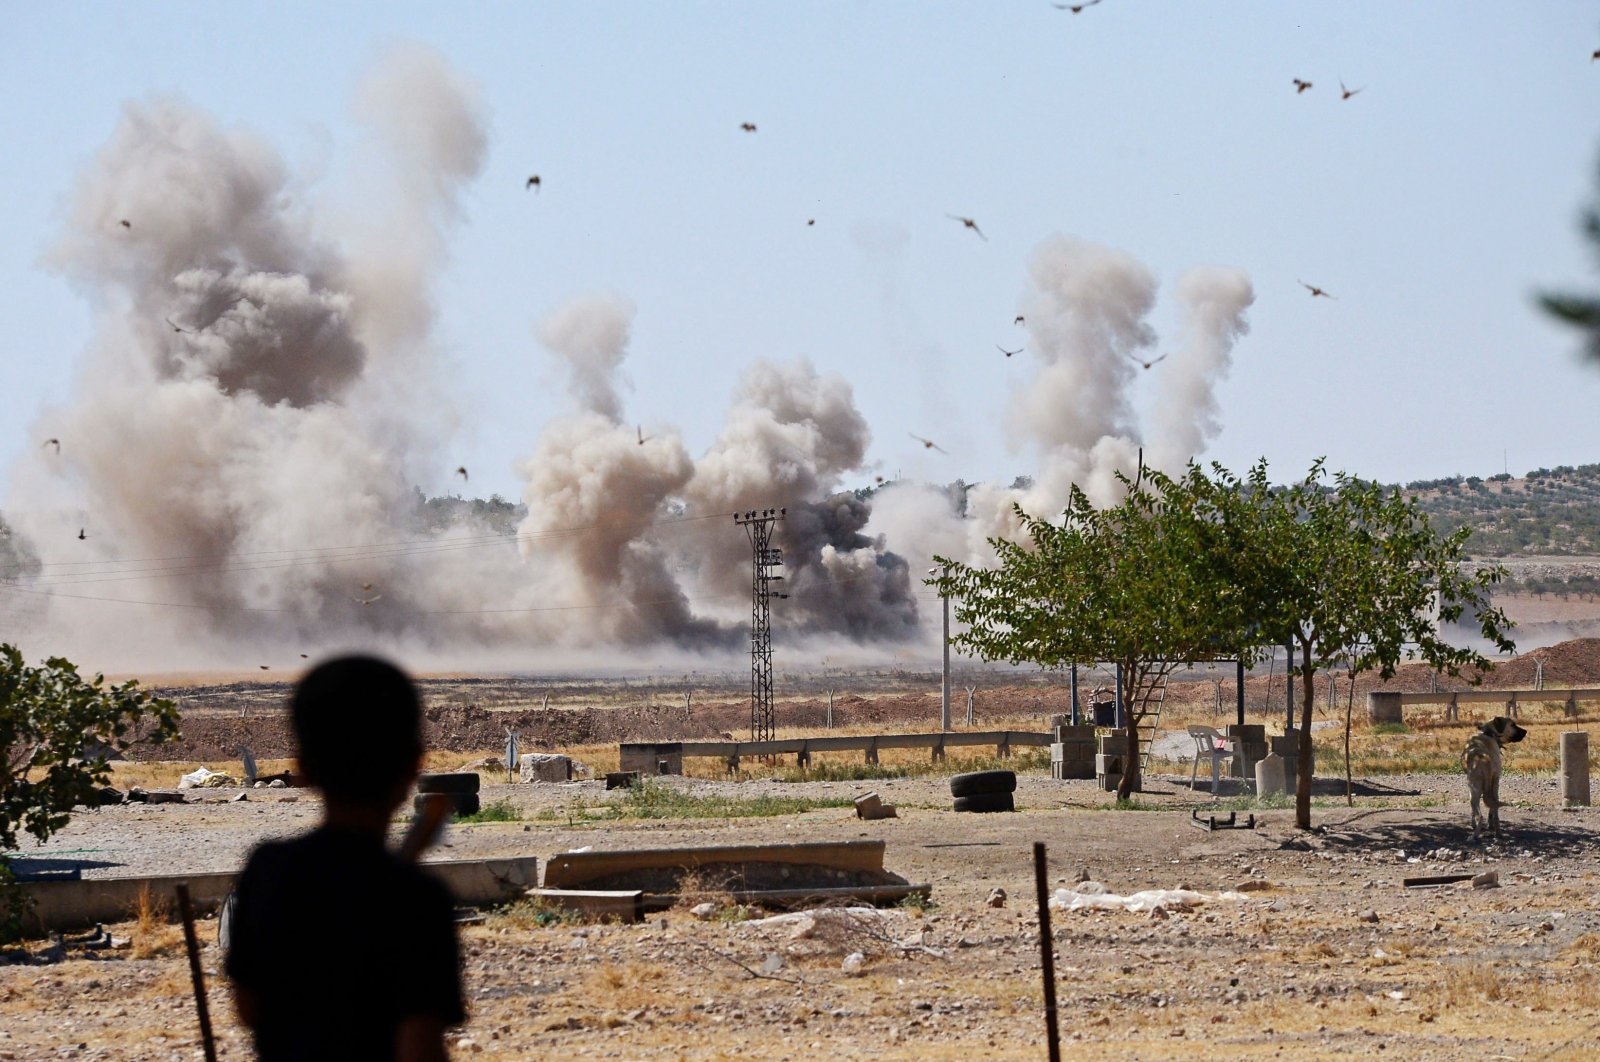 A child watches as dust and smoke rise from multiple landmine explosions, Turkey-Syrian border. (Ismail Çoşkun via IHA)